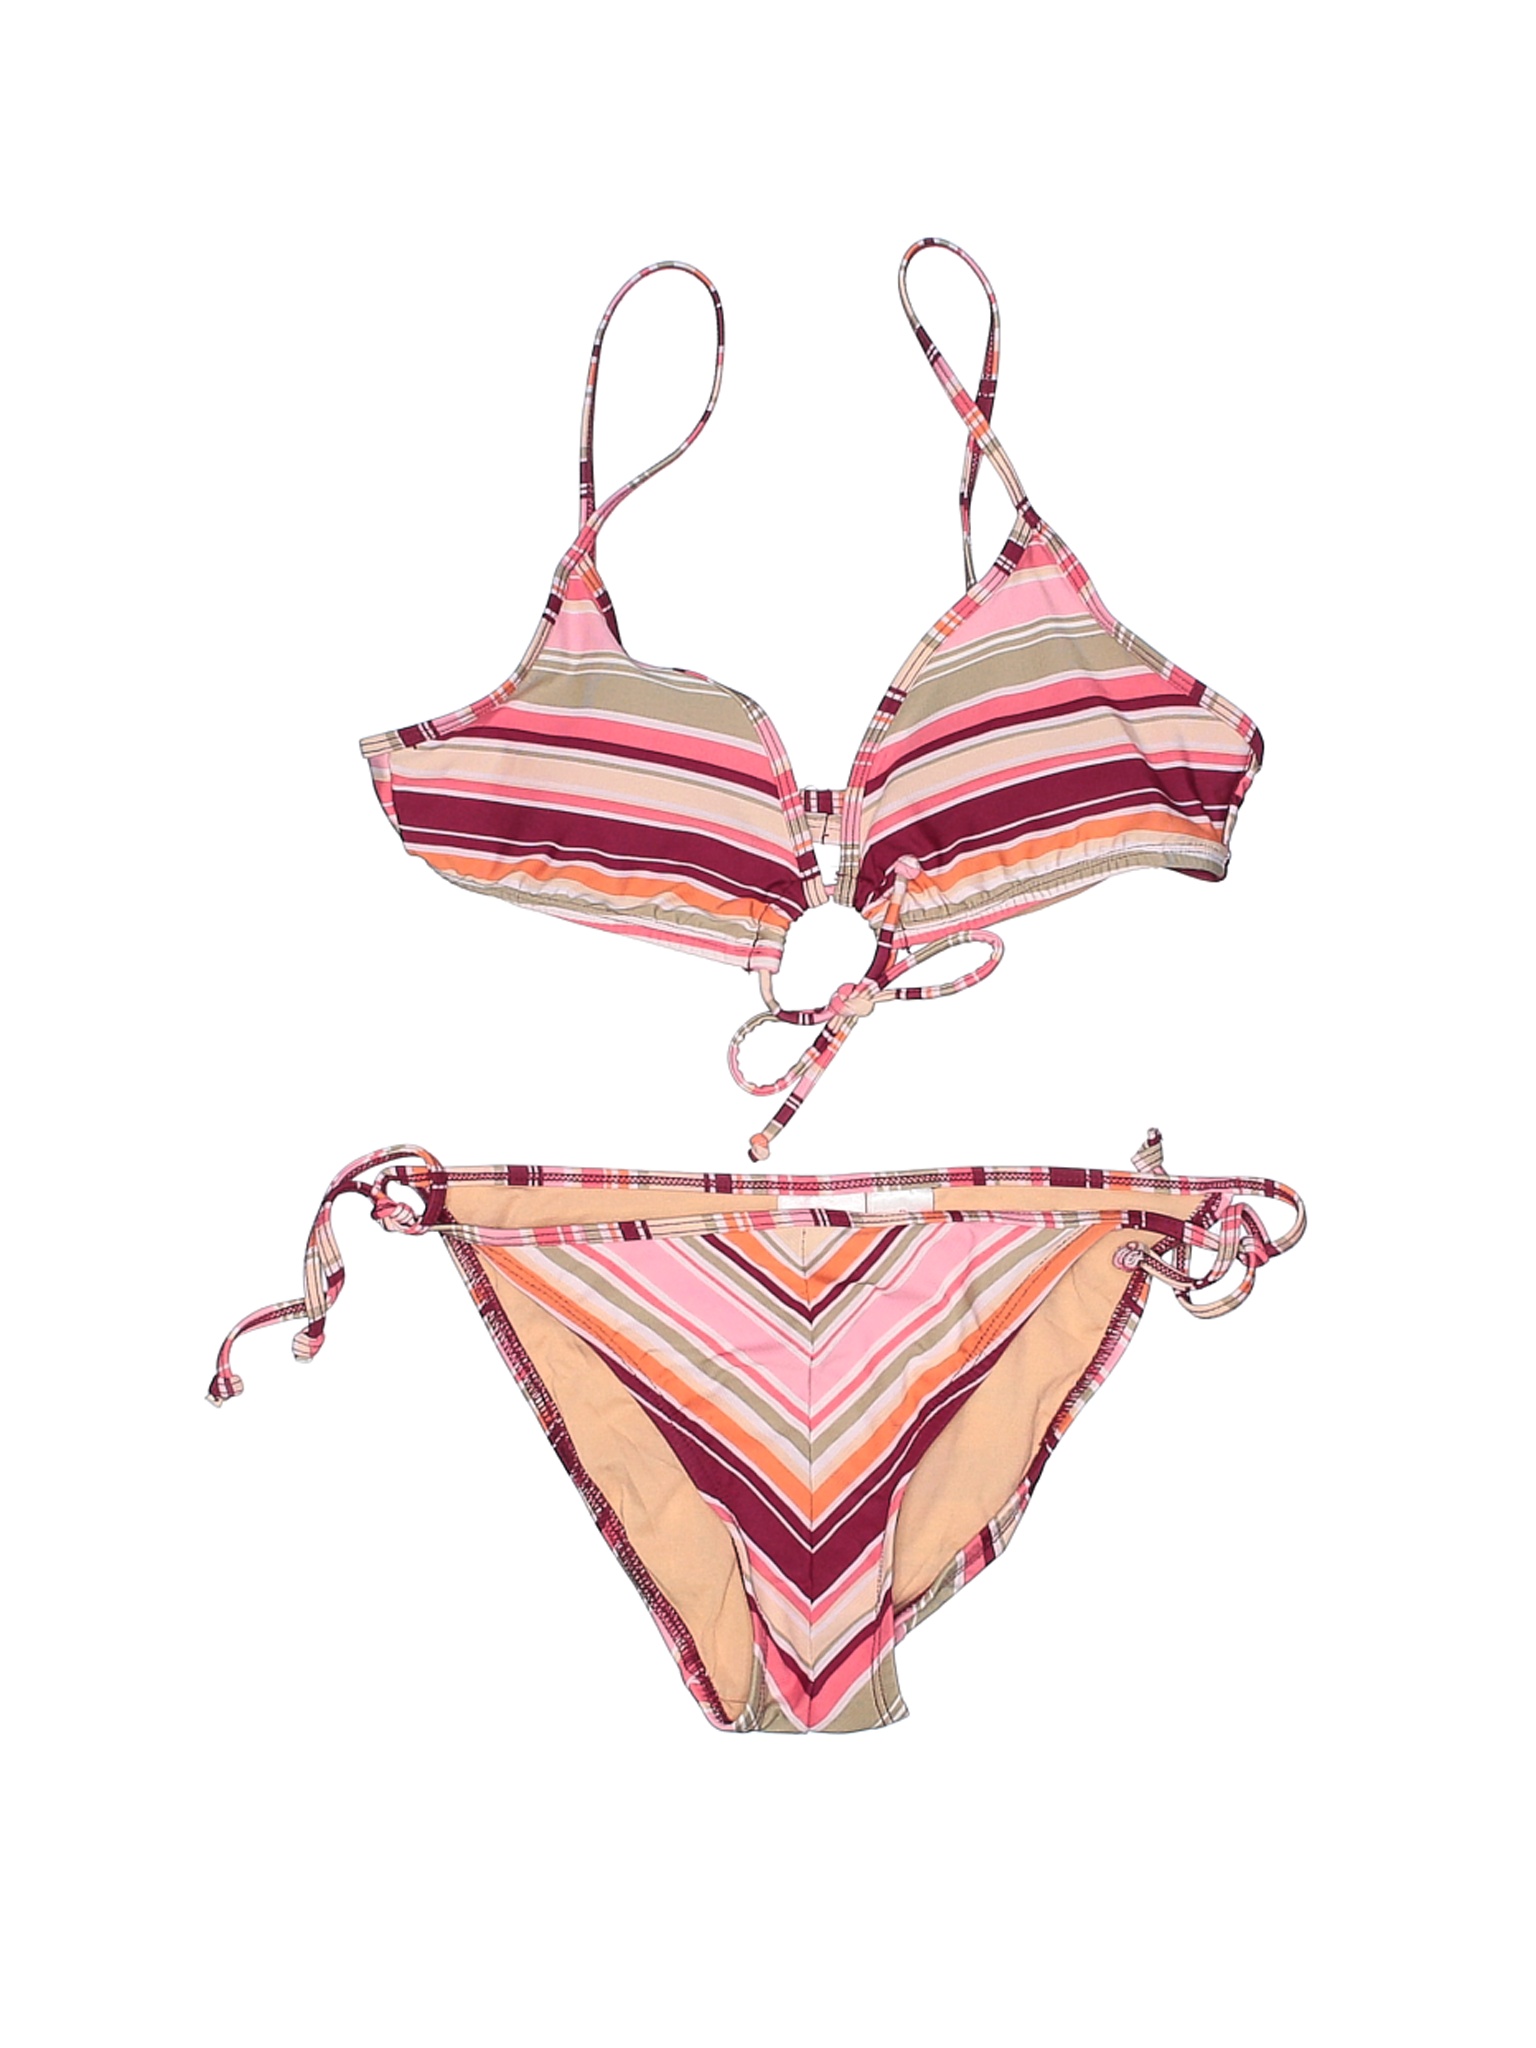 Xhilaration Women Pink Two Piece Swimsuit S | eBay